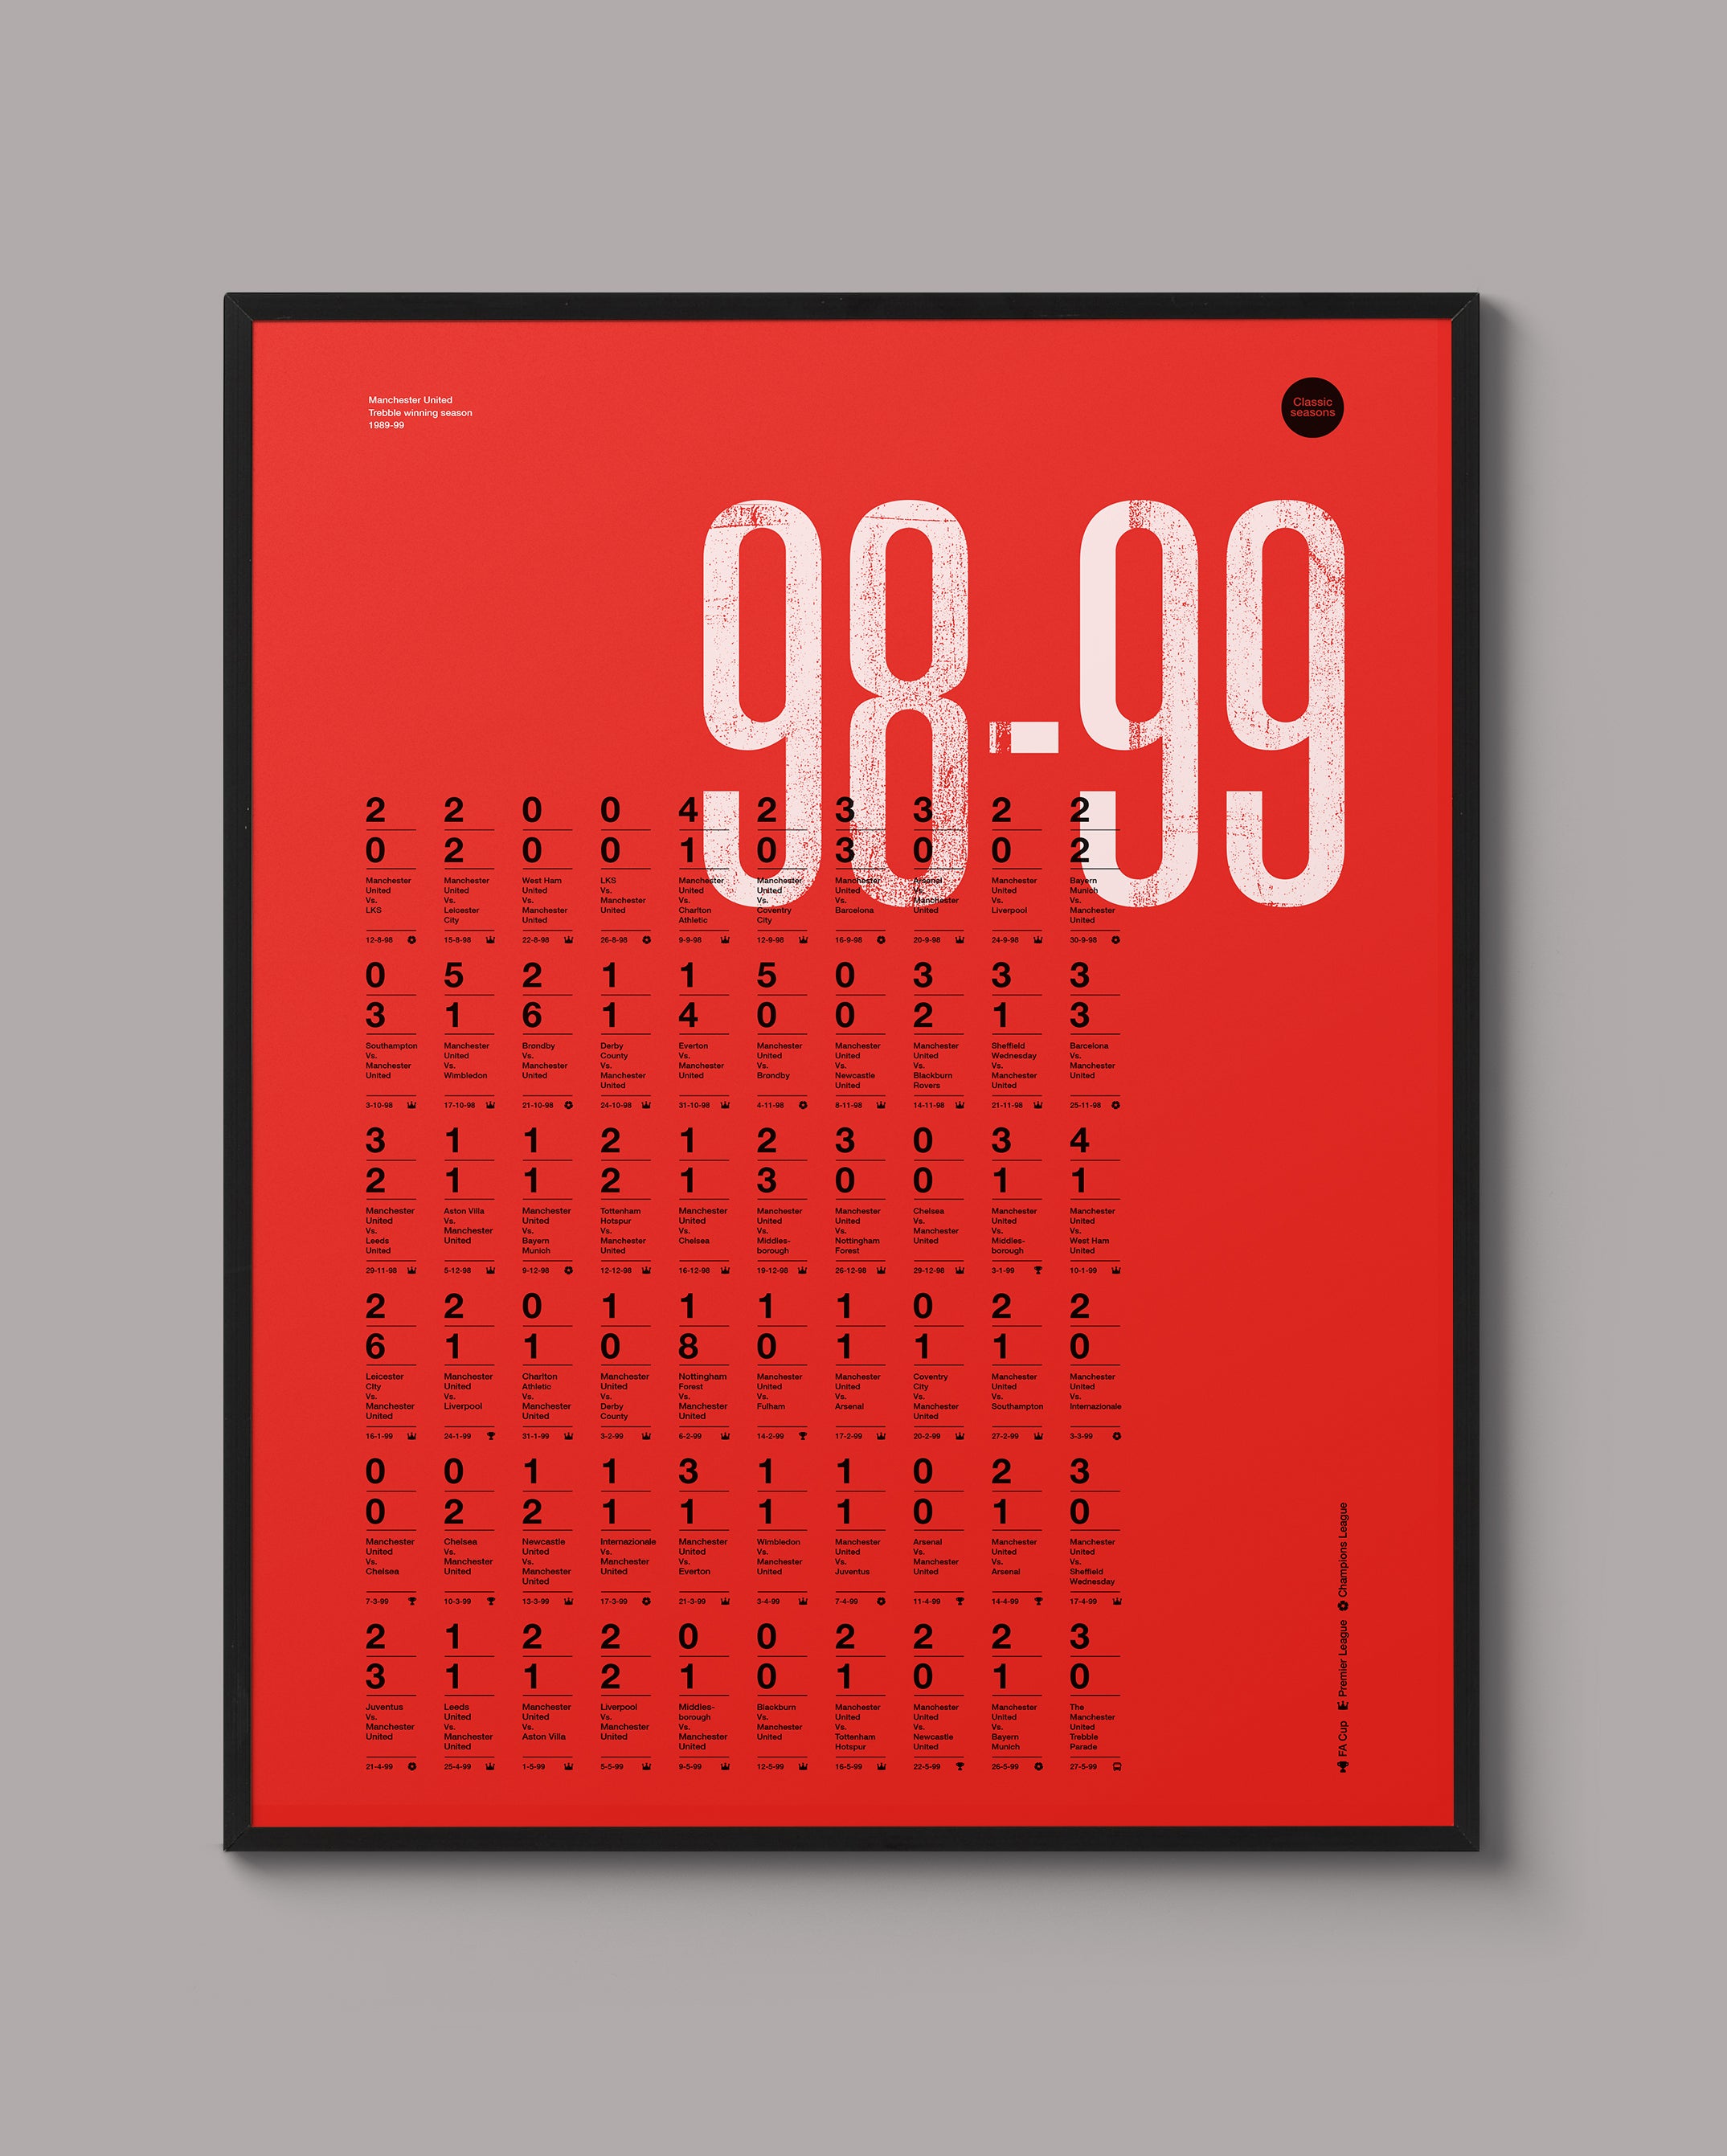 Classic season print  – MUFC 98-99